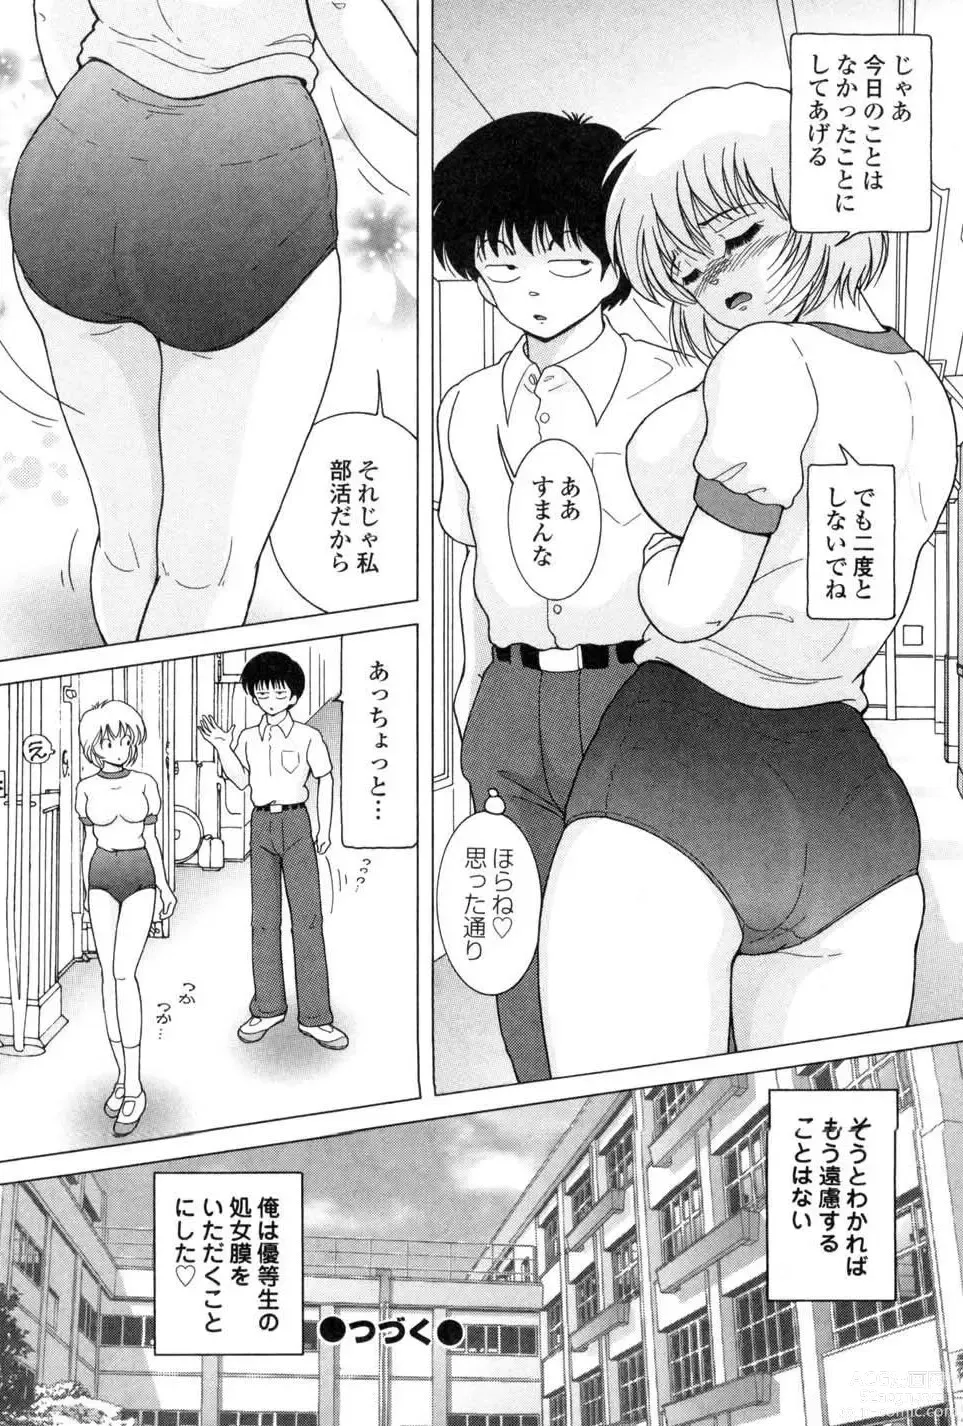 Page 16 of manga Jogakusei Maetsu no Kyoukasho - The Schoolgirl With Shameful Textbook